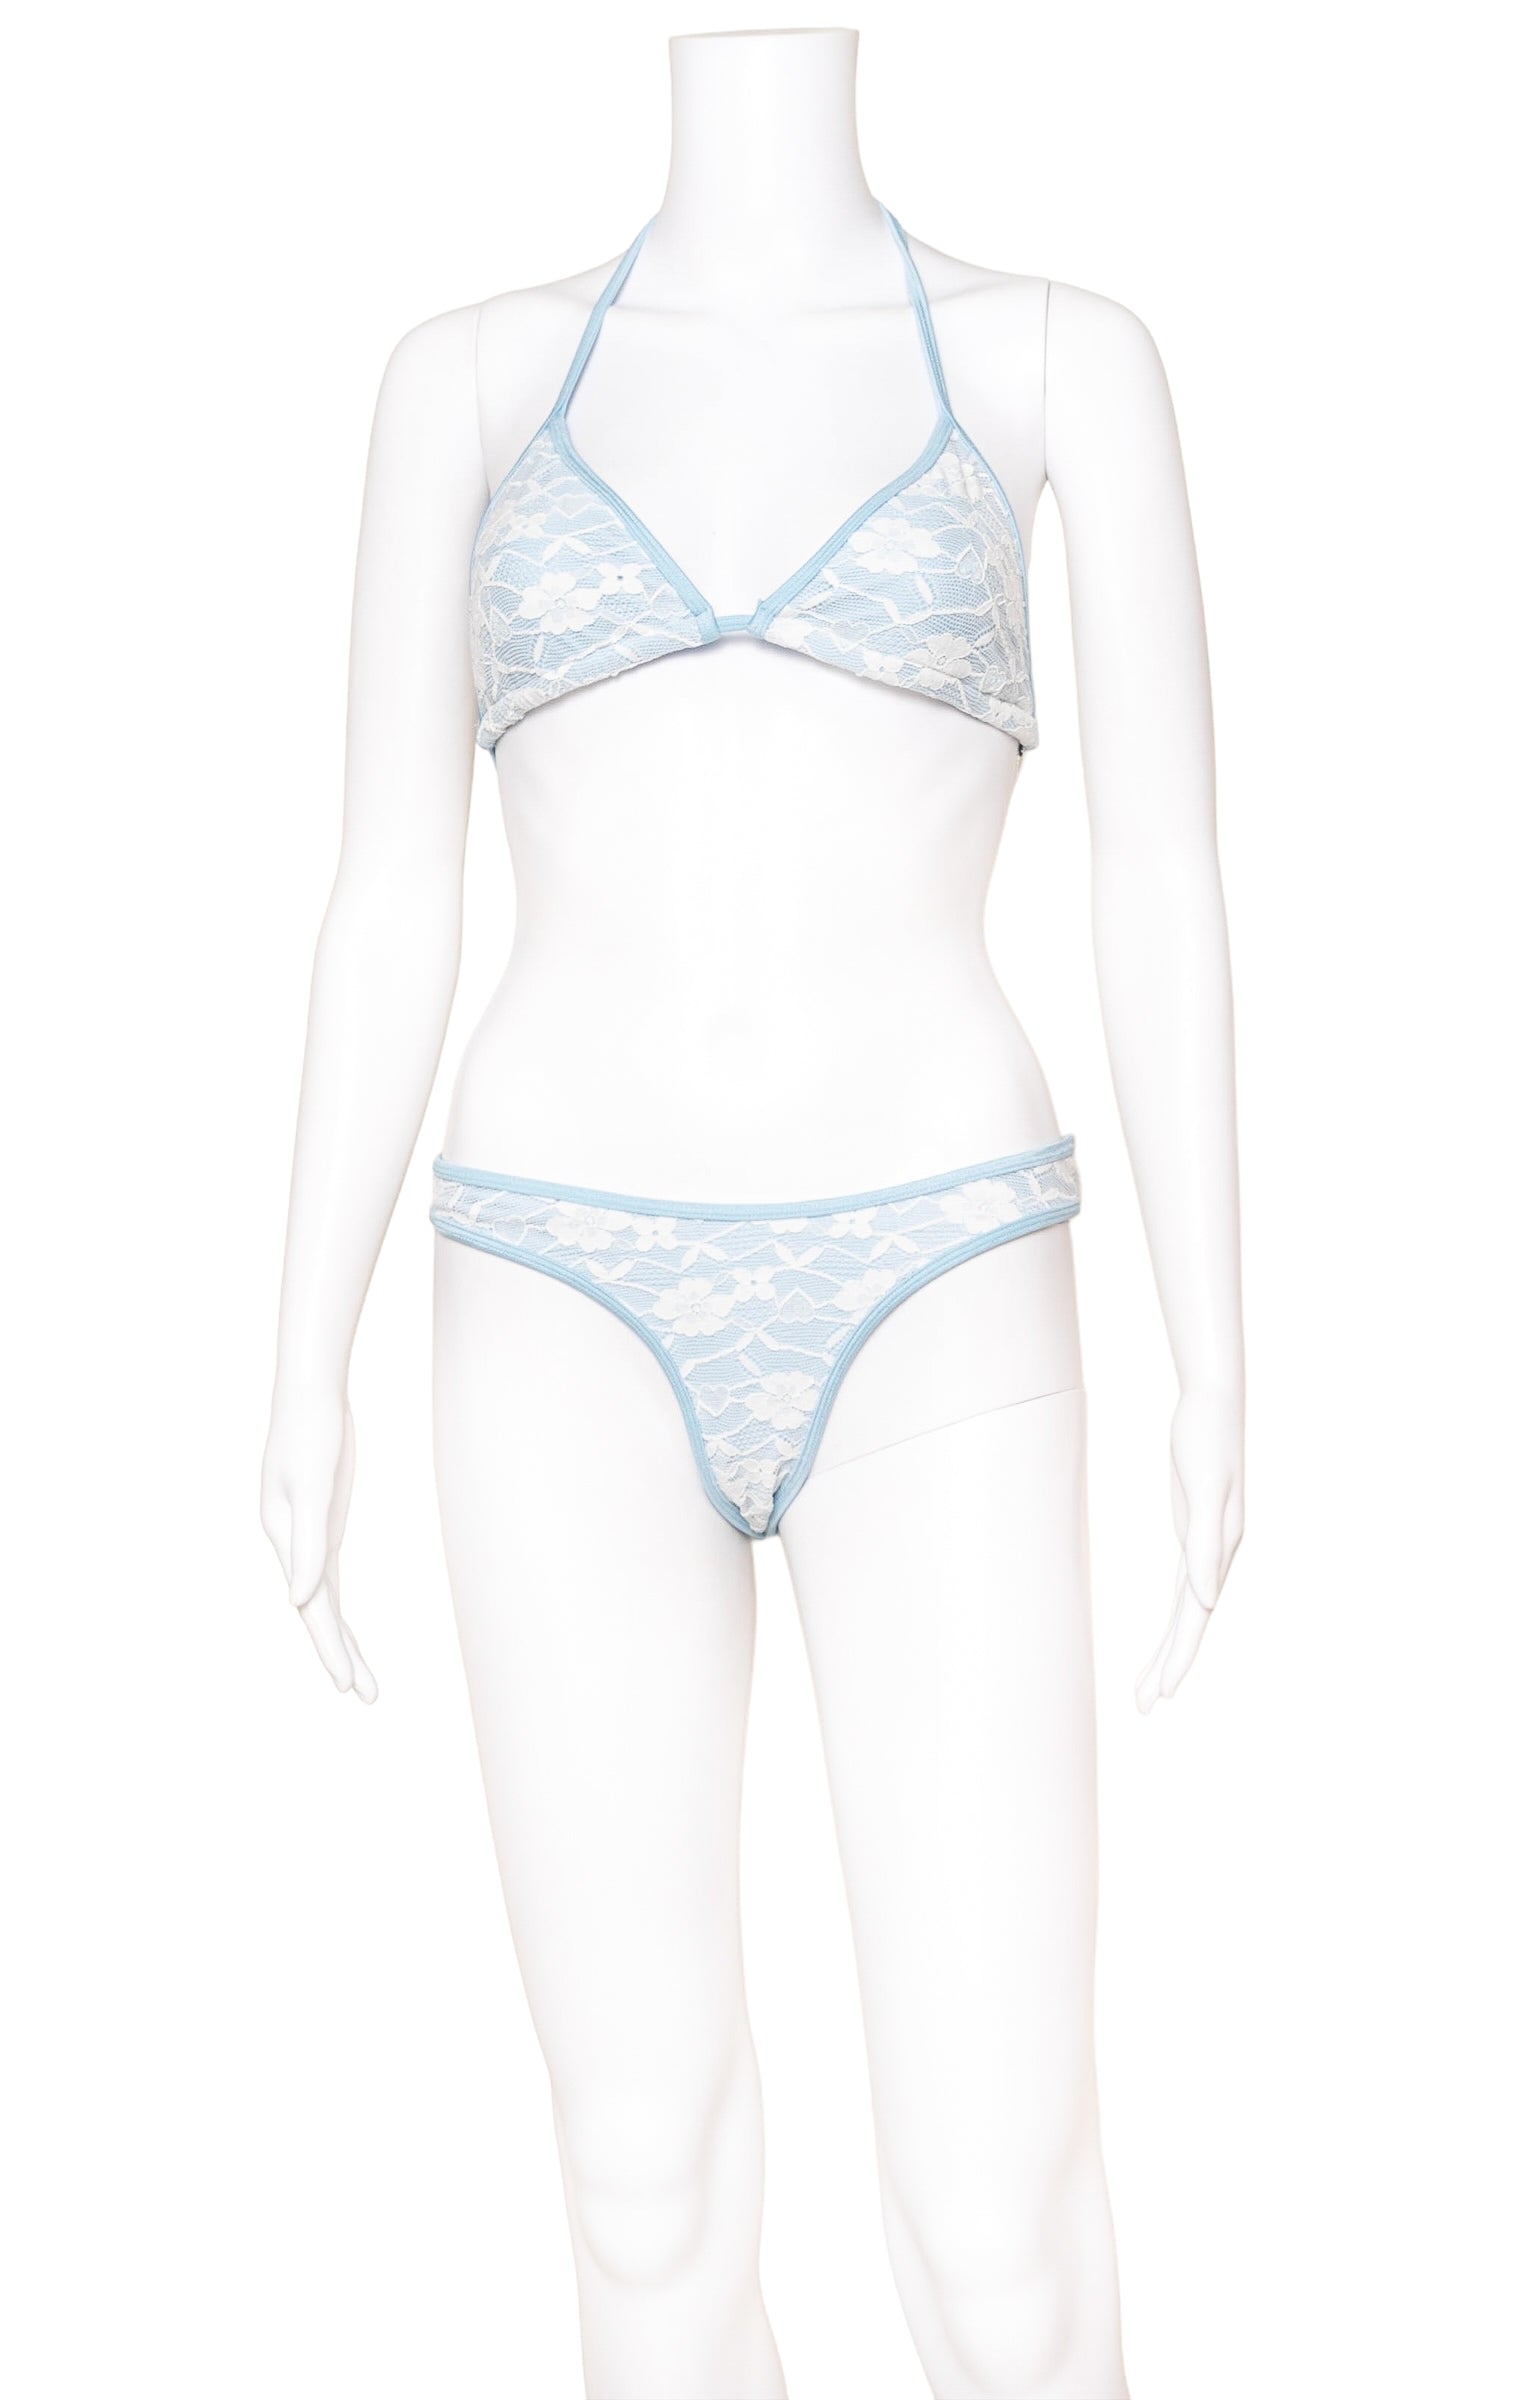 FRANKIES BIKINIS (NEW) with tags Bikini Set Size: S